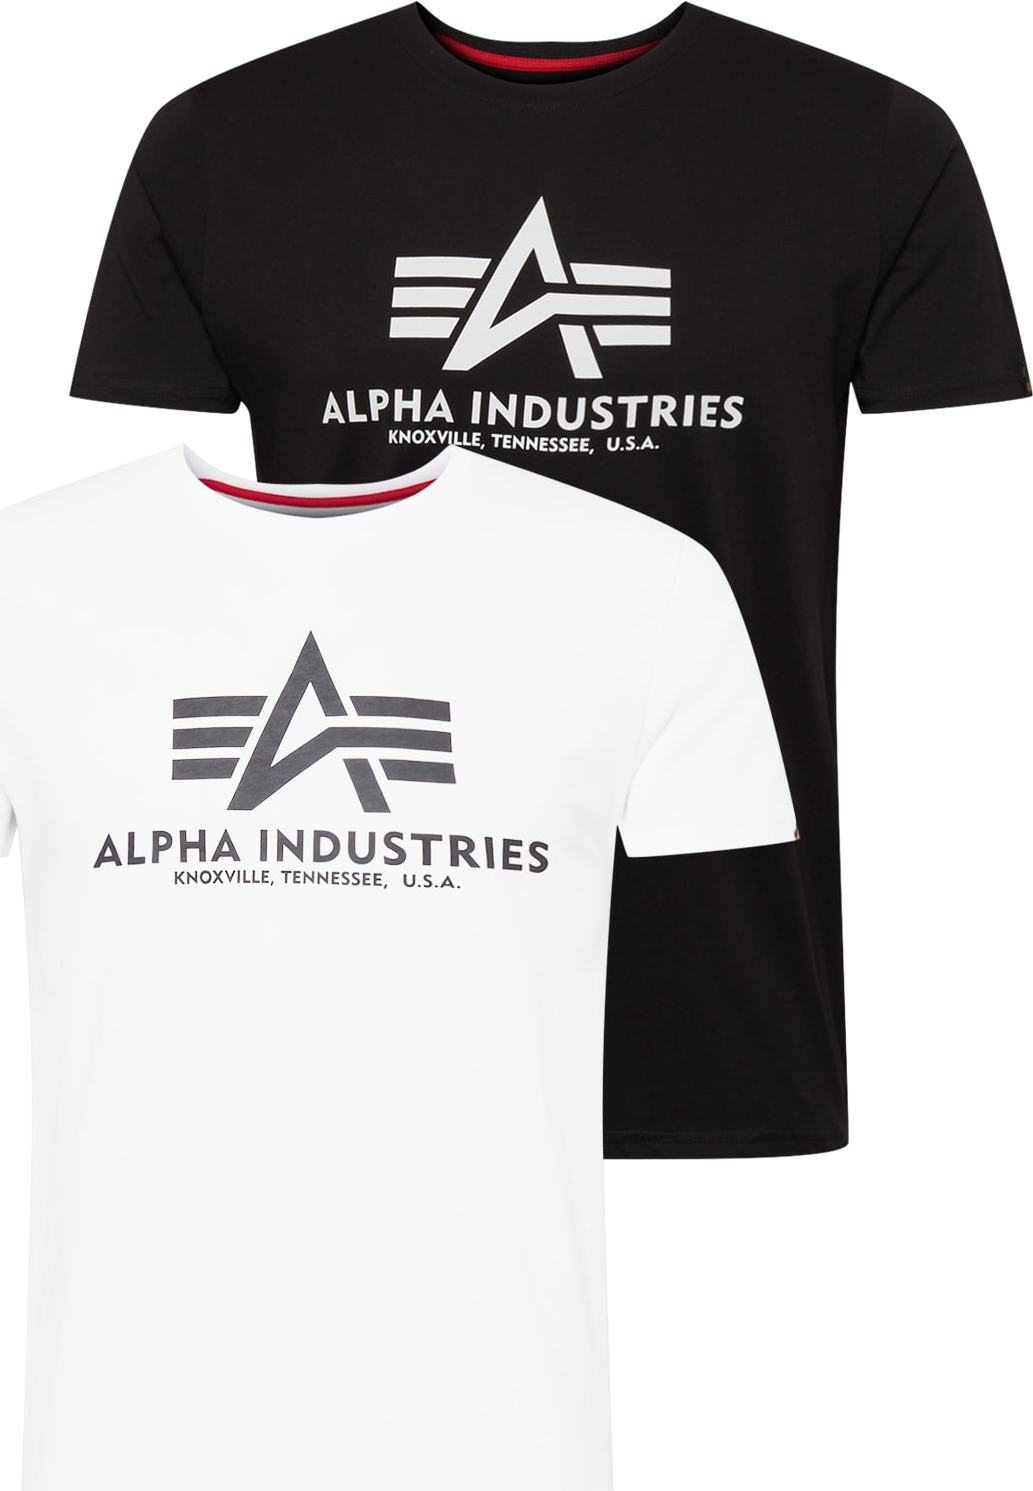 Tričko alpha industries černá / bílá